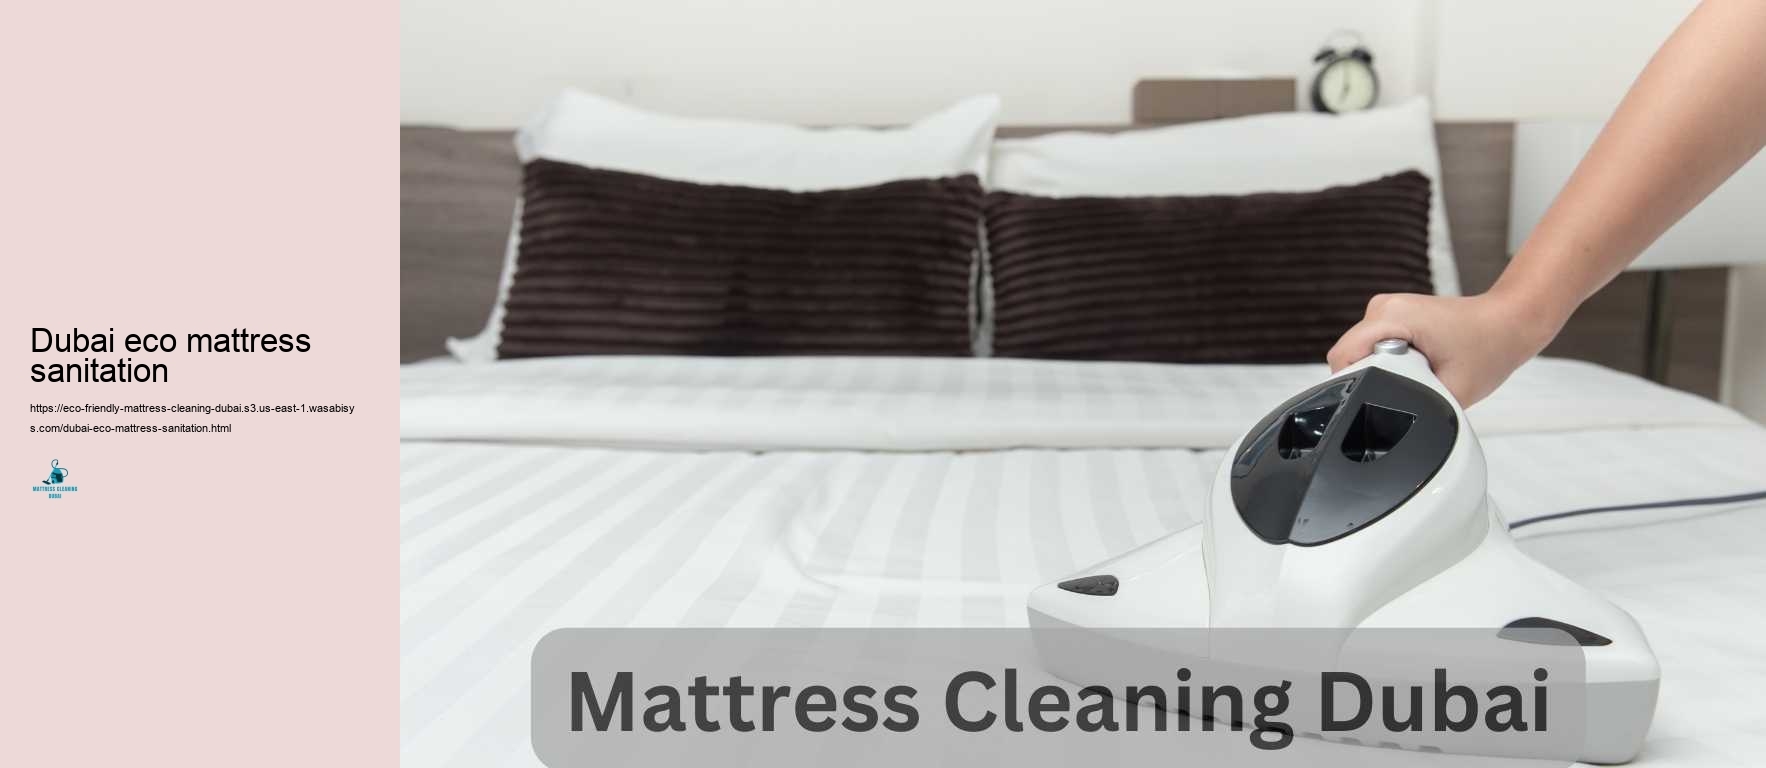 Dubai eco mattress sanitation